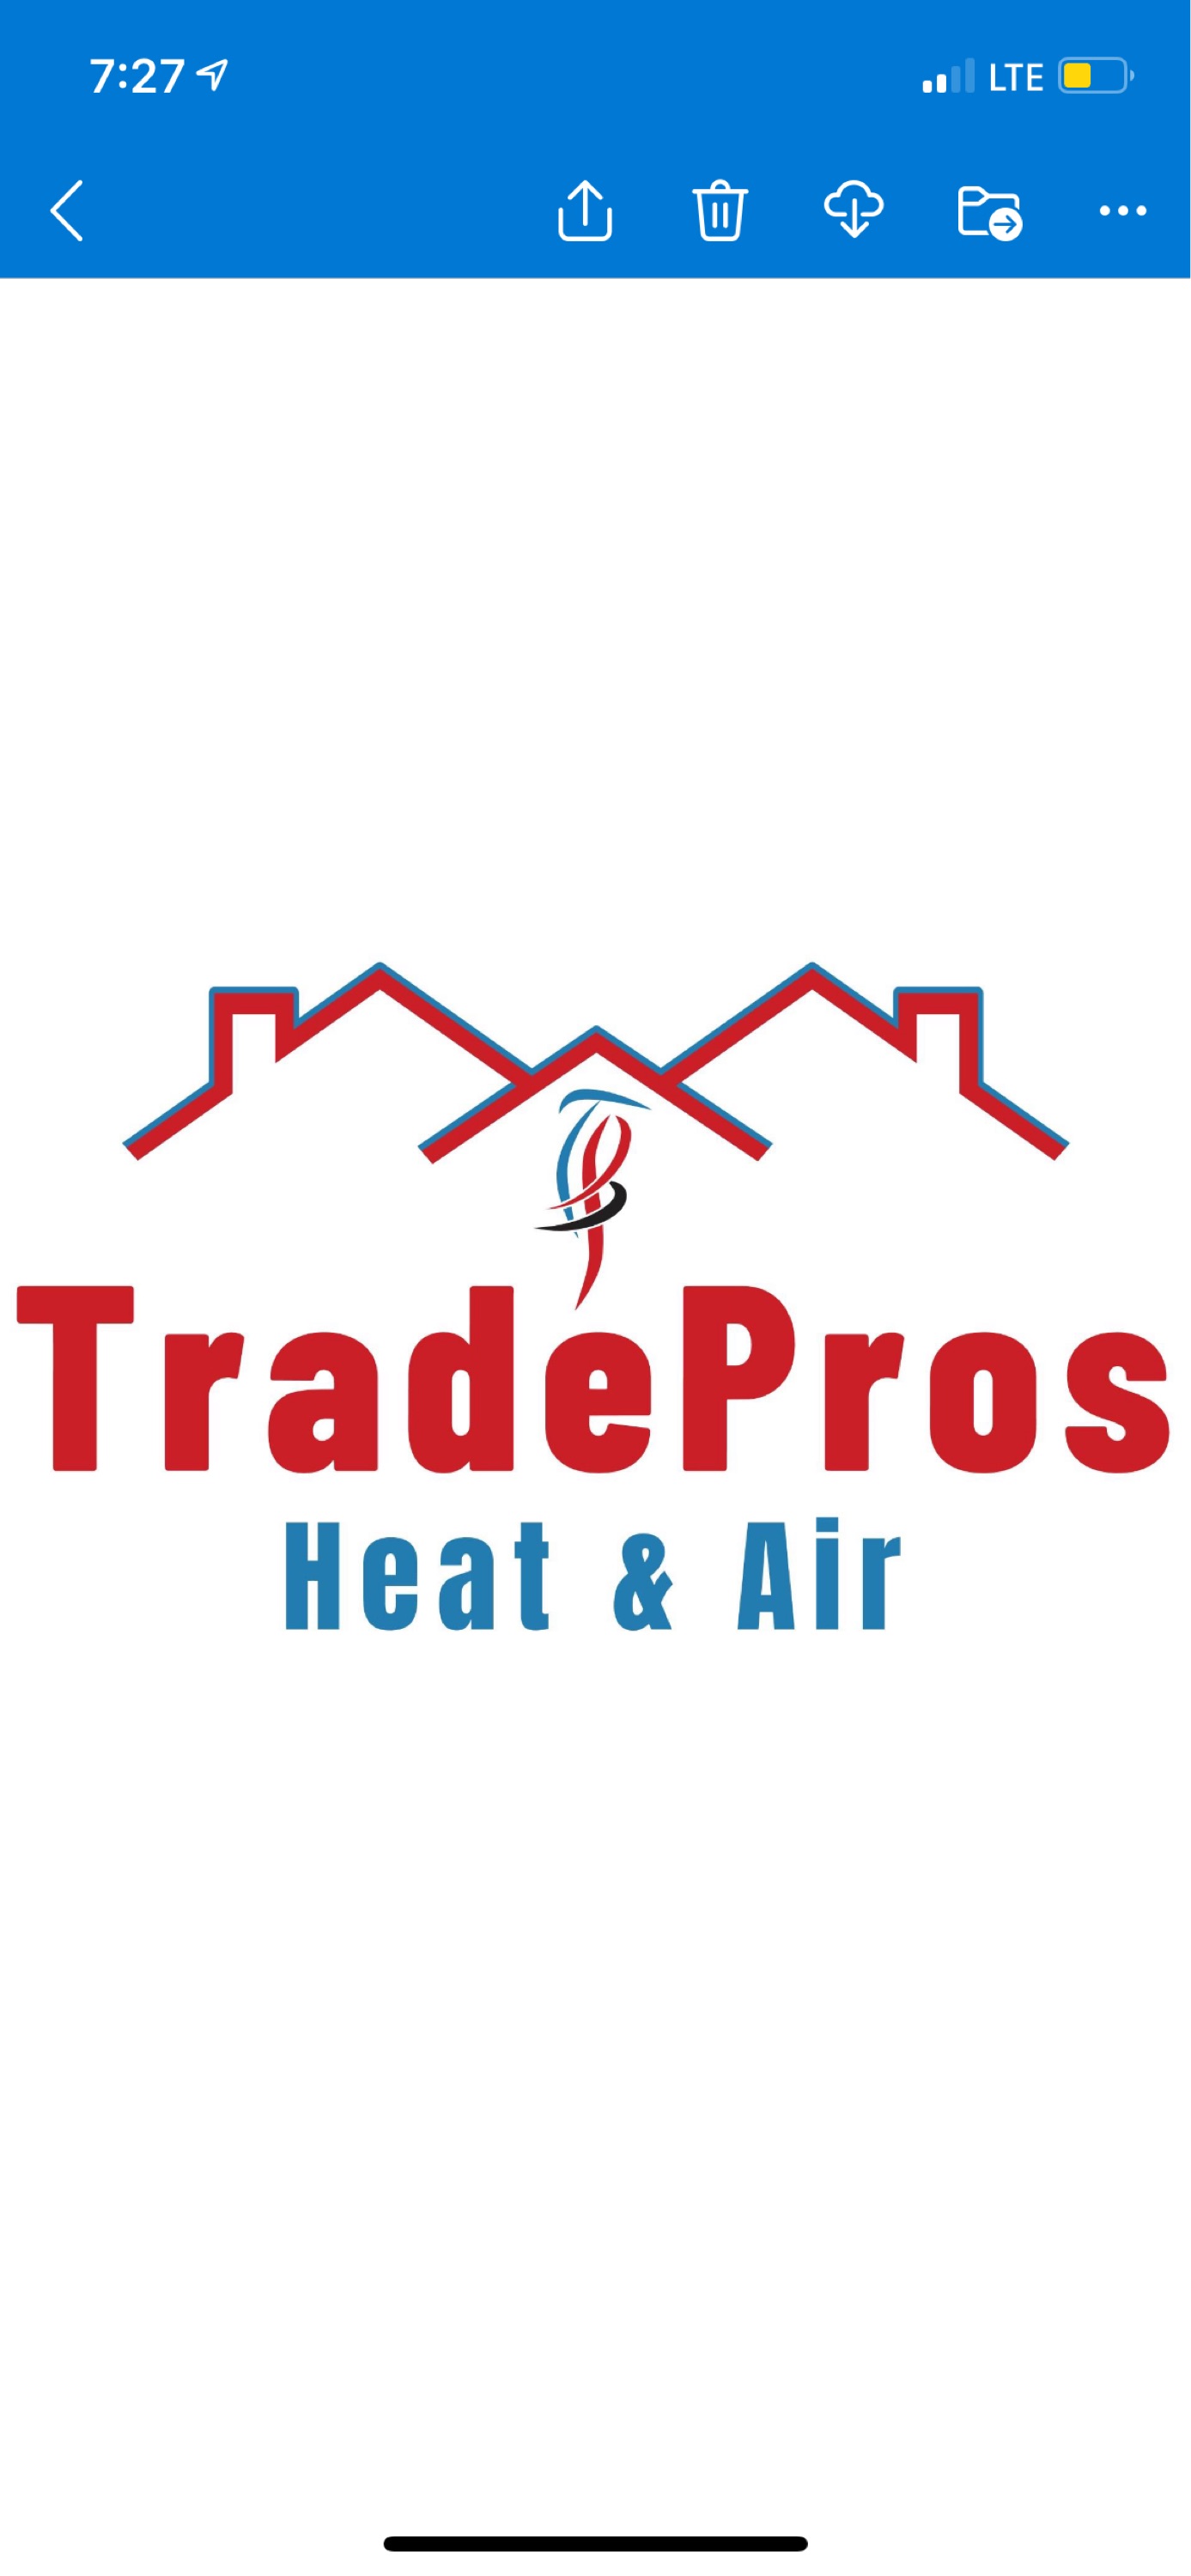 TradePros Heat & Air Logo